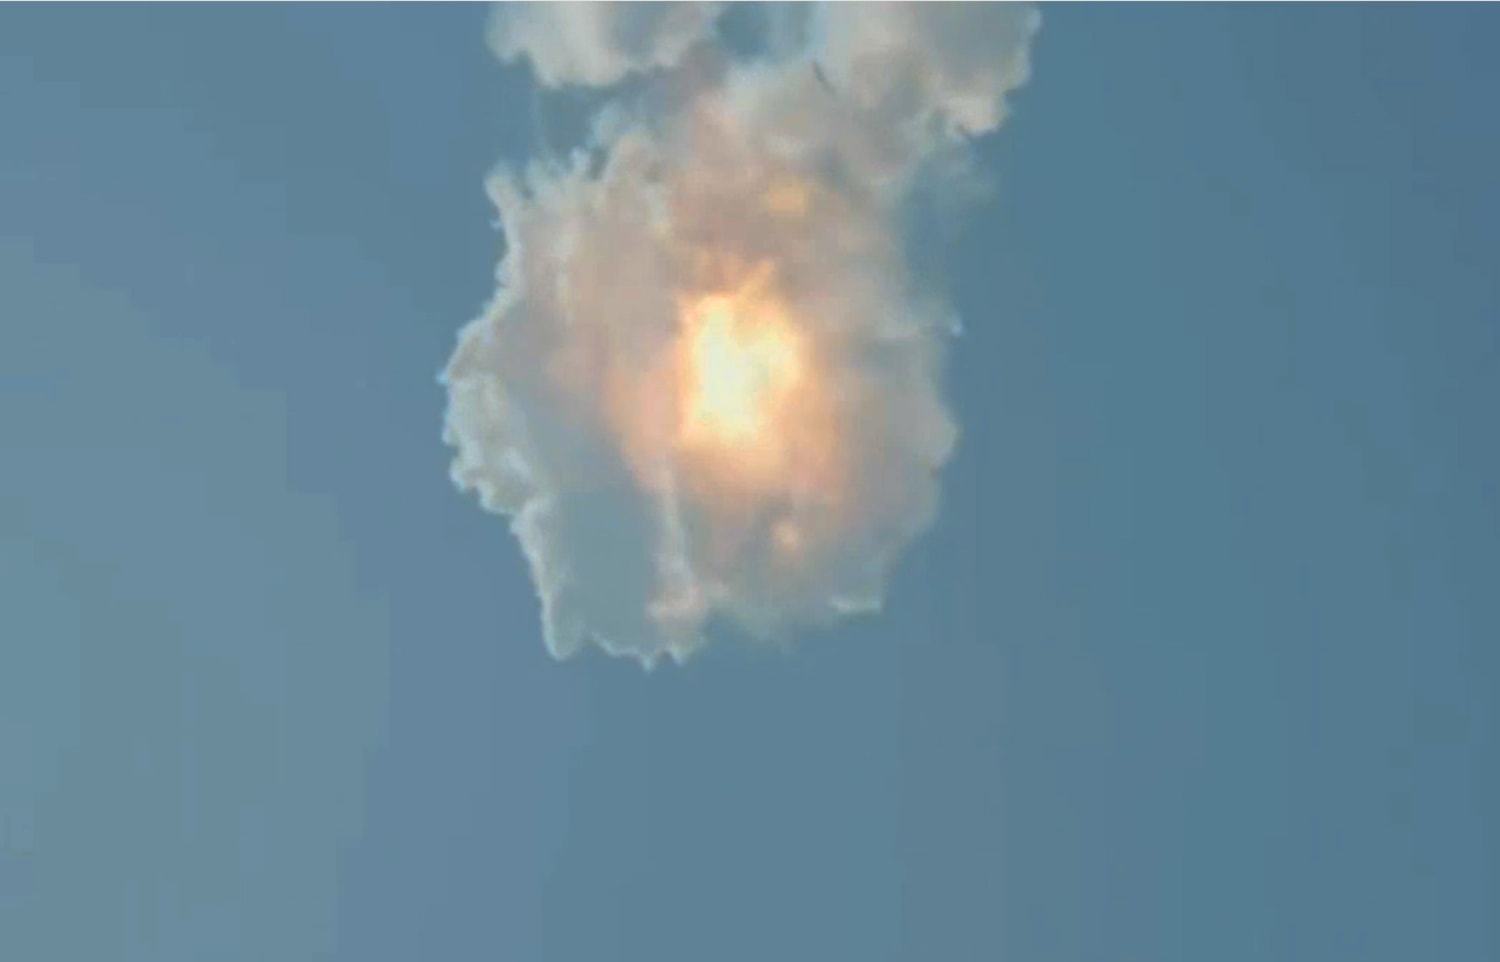 SpaceX's Starship rocket blasts off on its first test flight